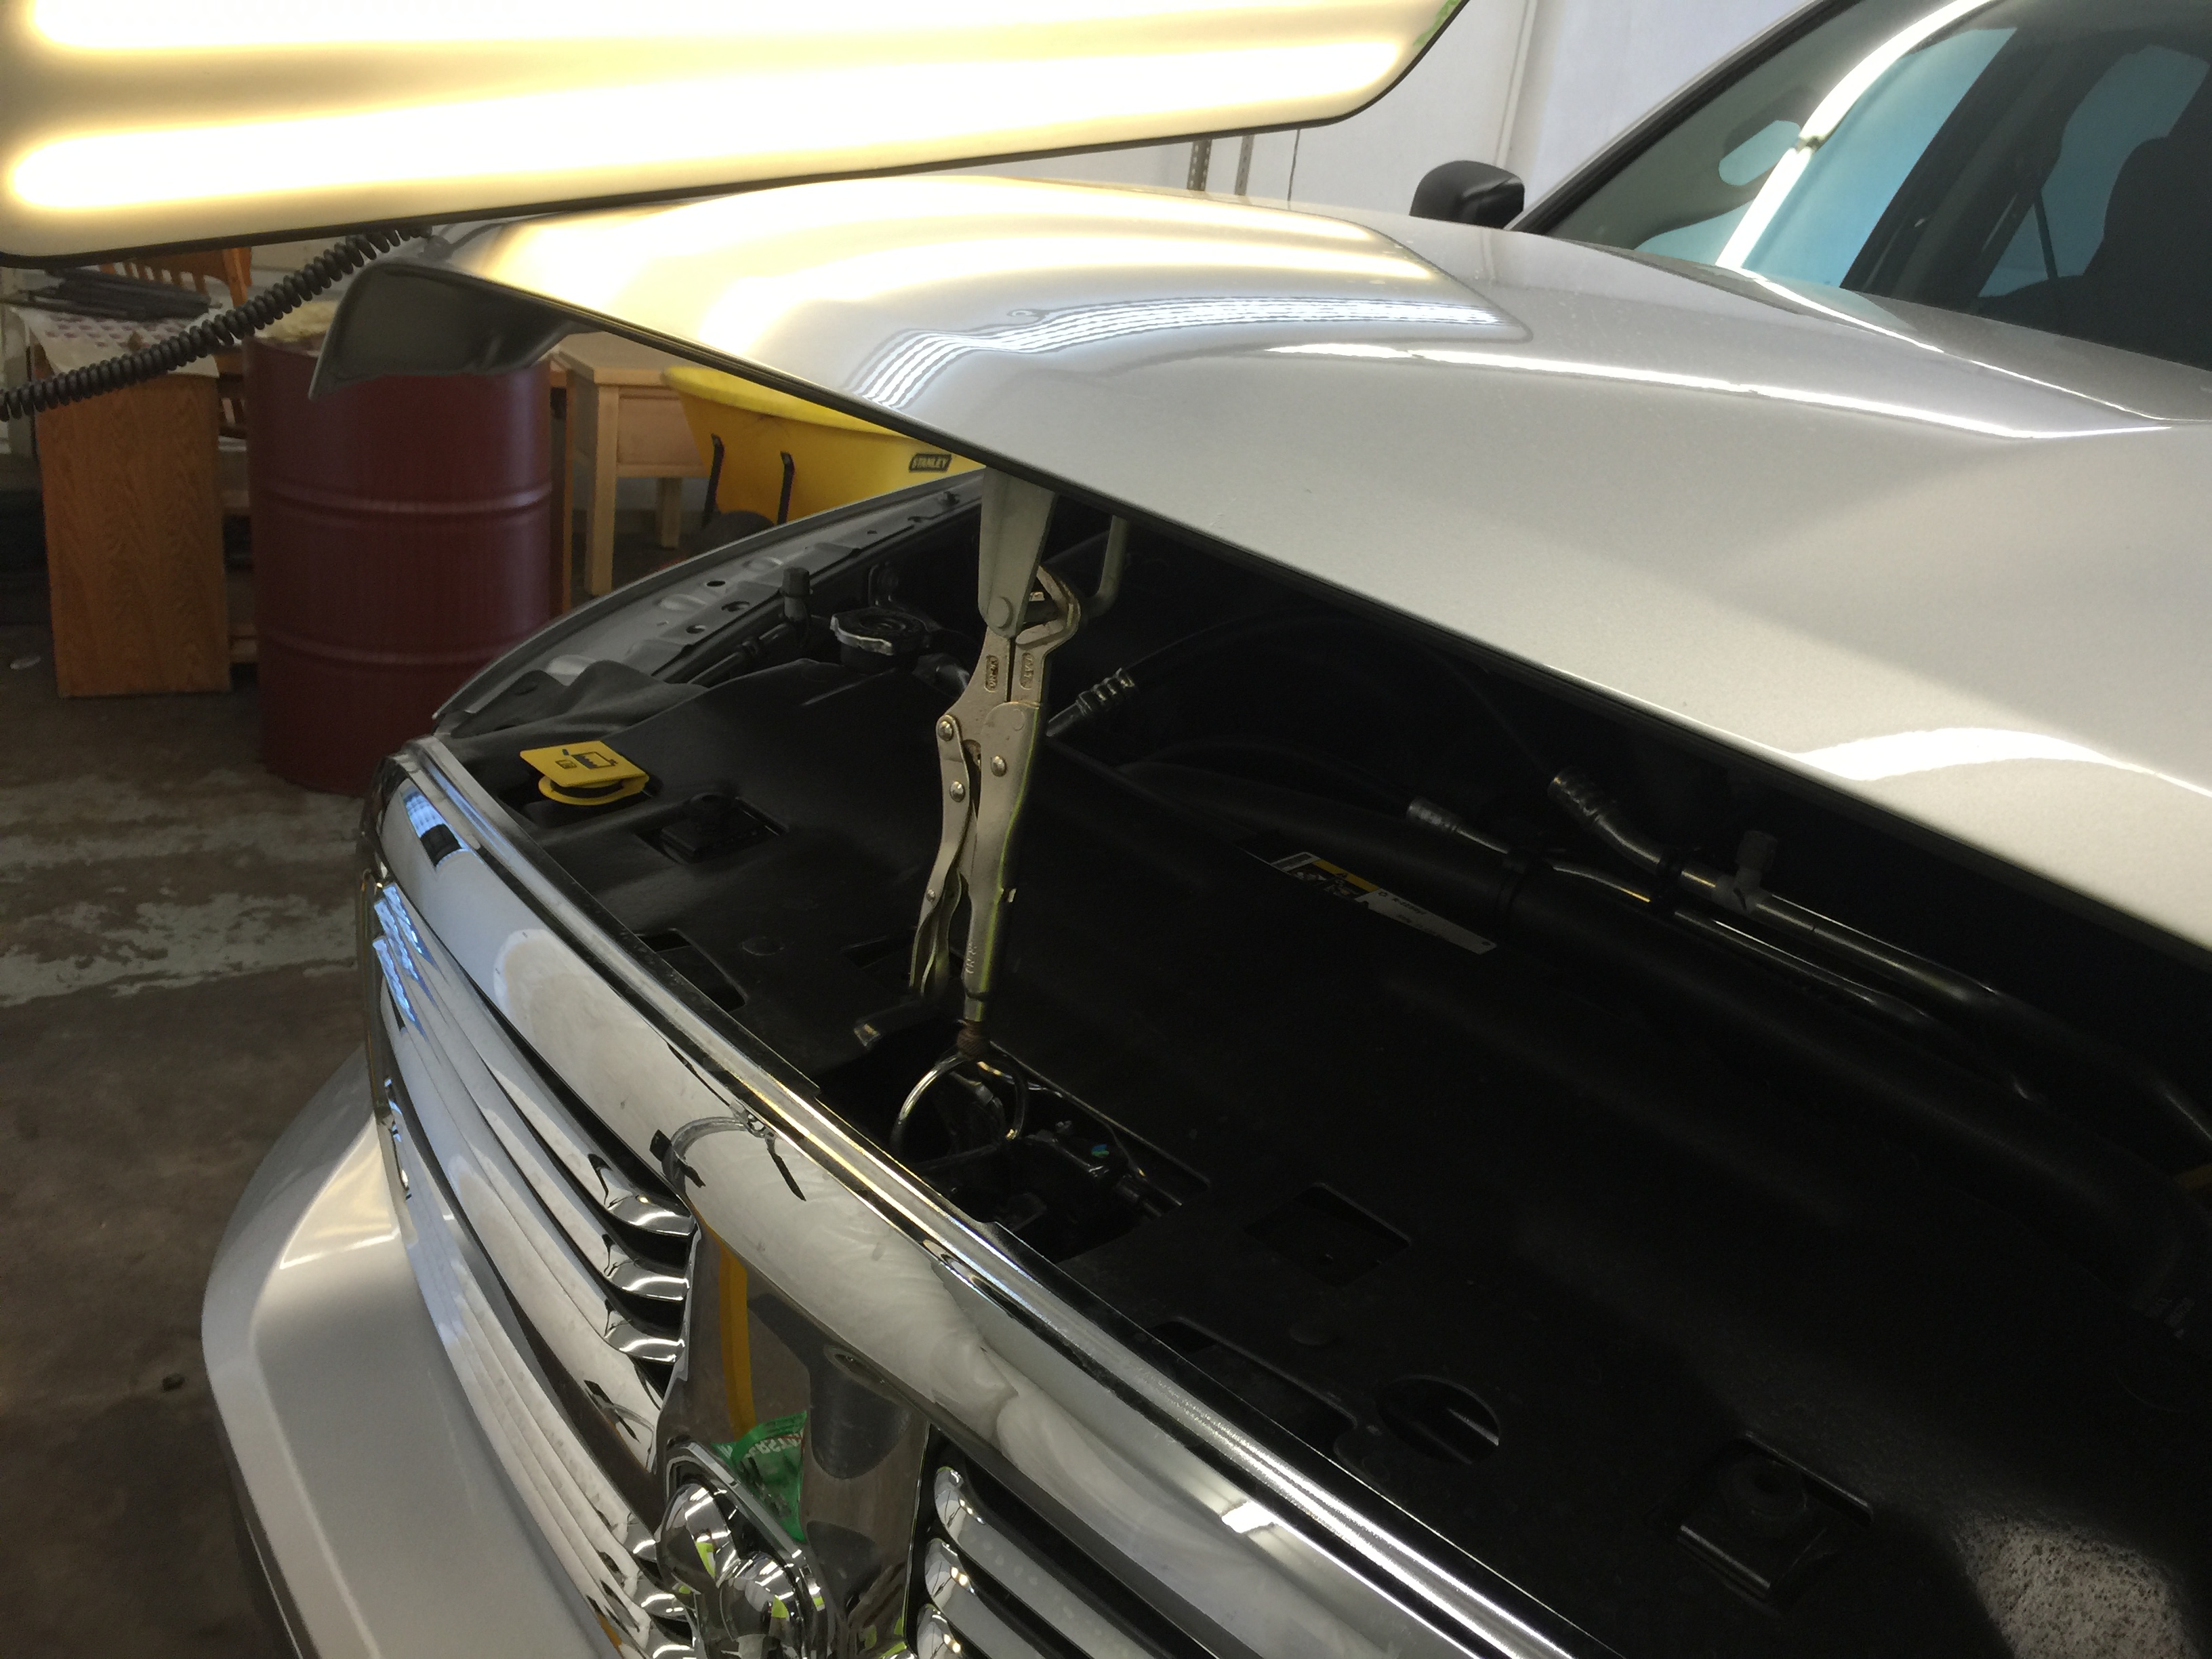 2015 Dodge Ram hail damage on hood, paintless dent repair, Springfield, IL. http://217dent.com by Michael Bocek